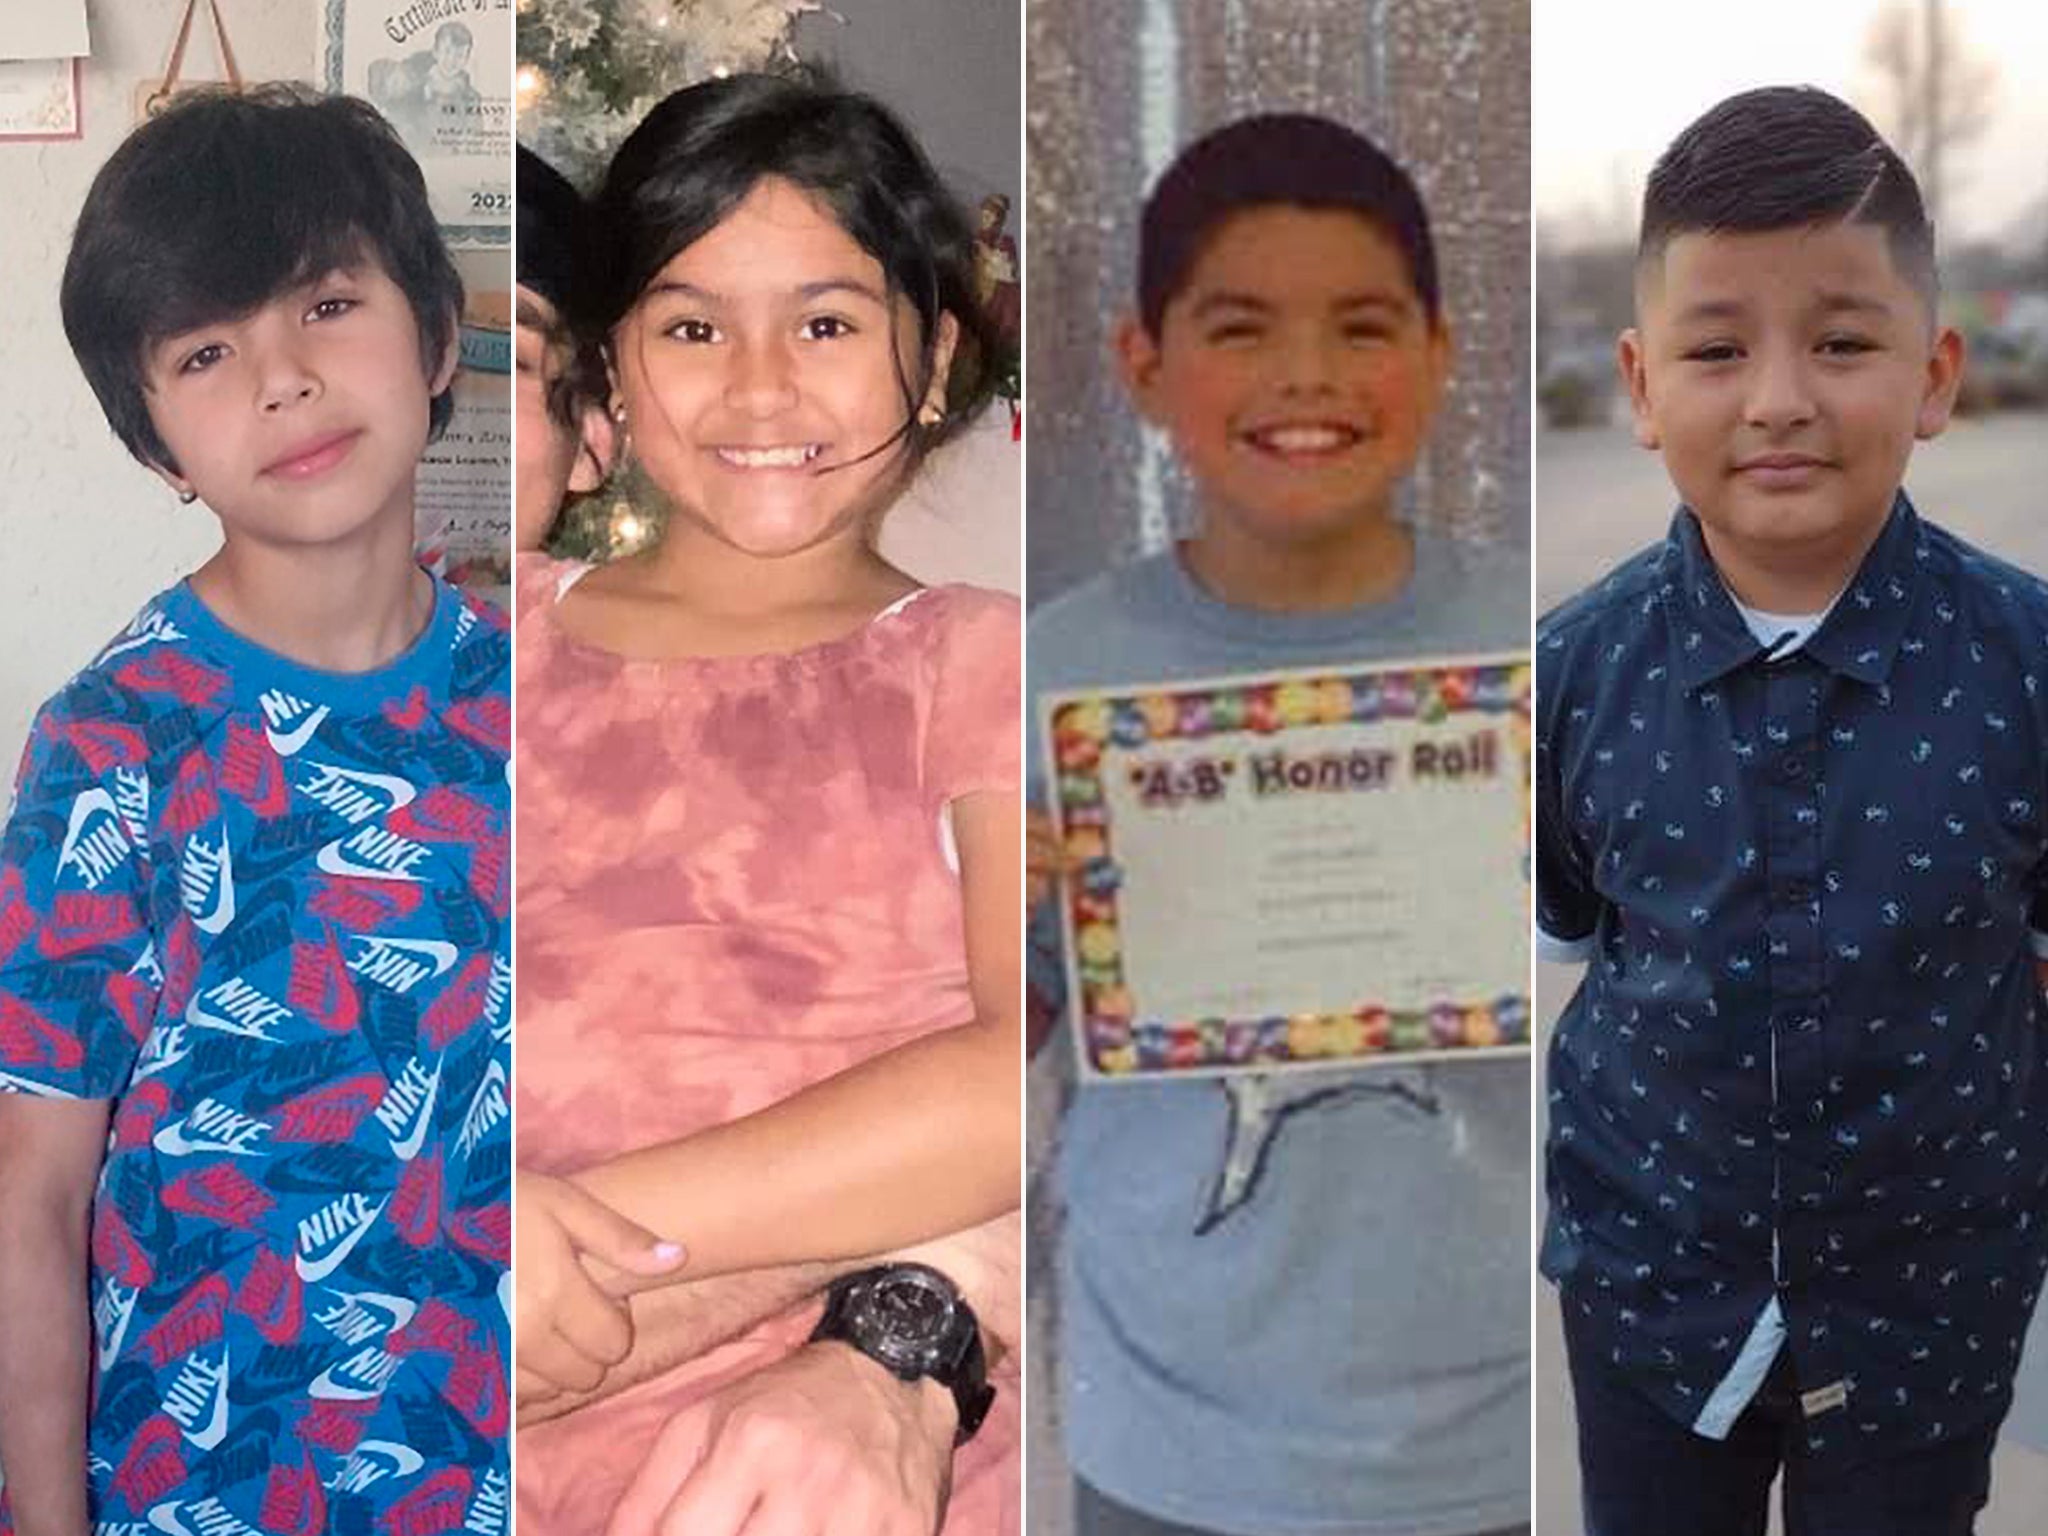 Texas primary school shooting victims Uziyah Garcia, Amerie Jo Garza, Jose Flores Jr and Xavier Javier Lopez